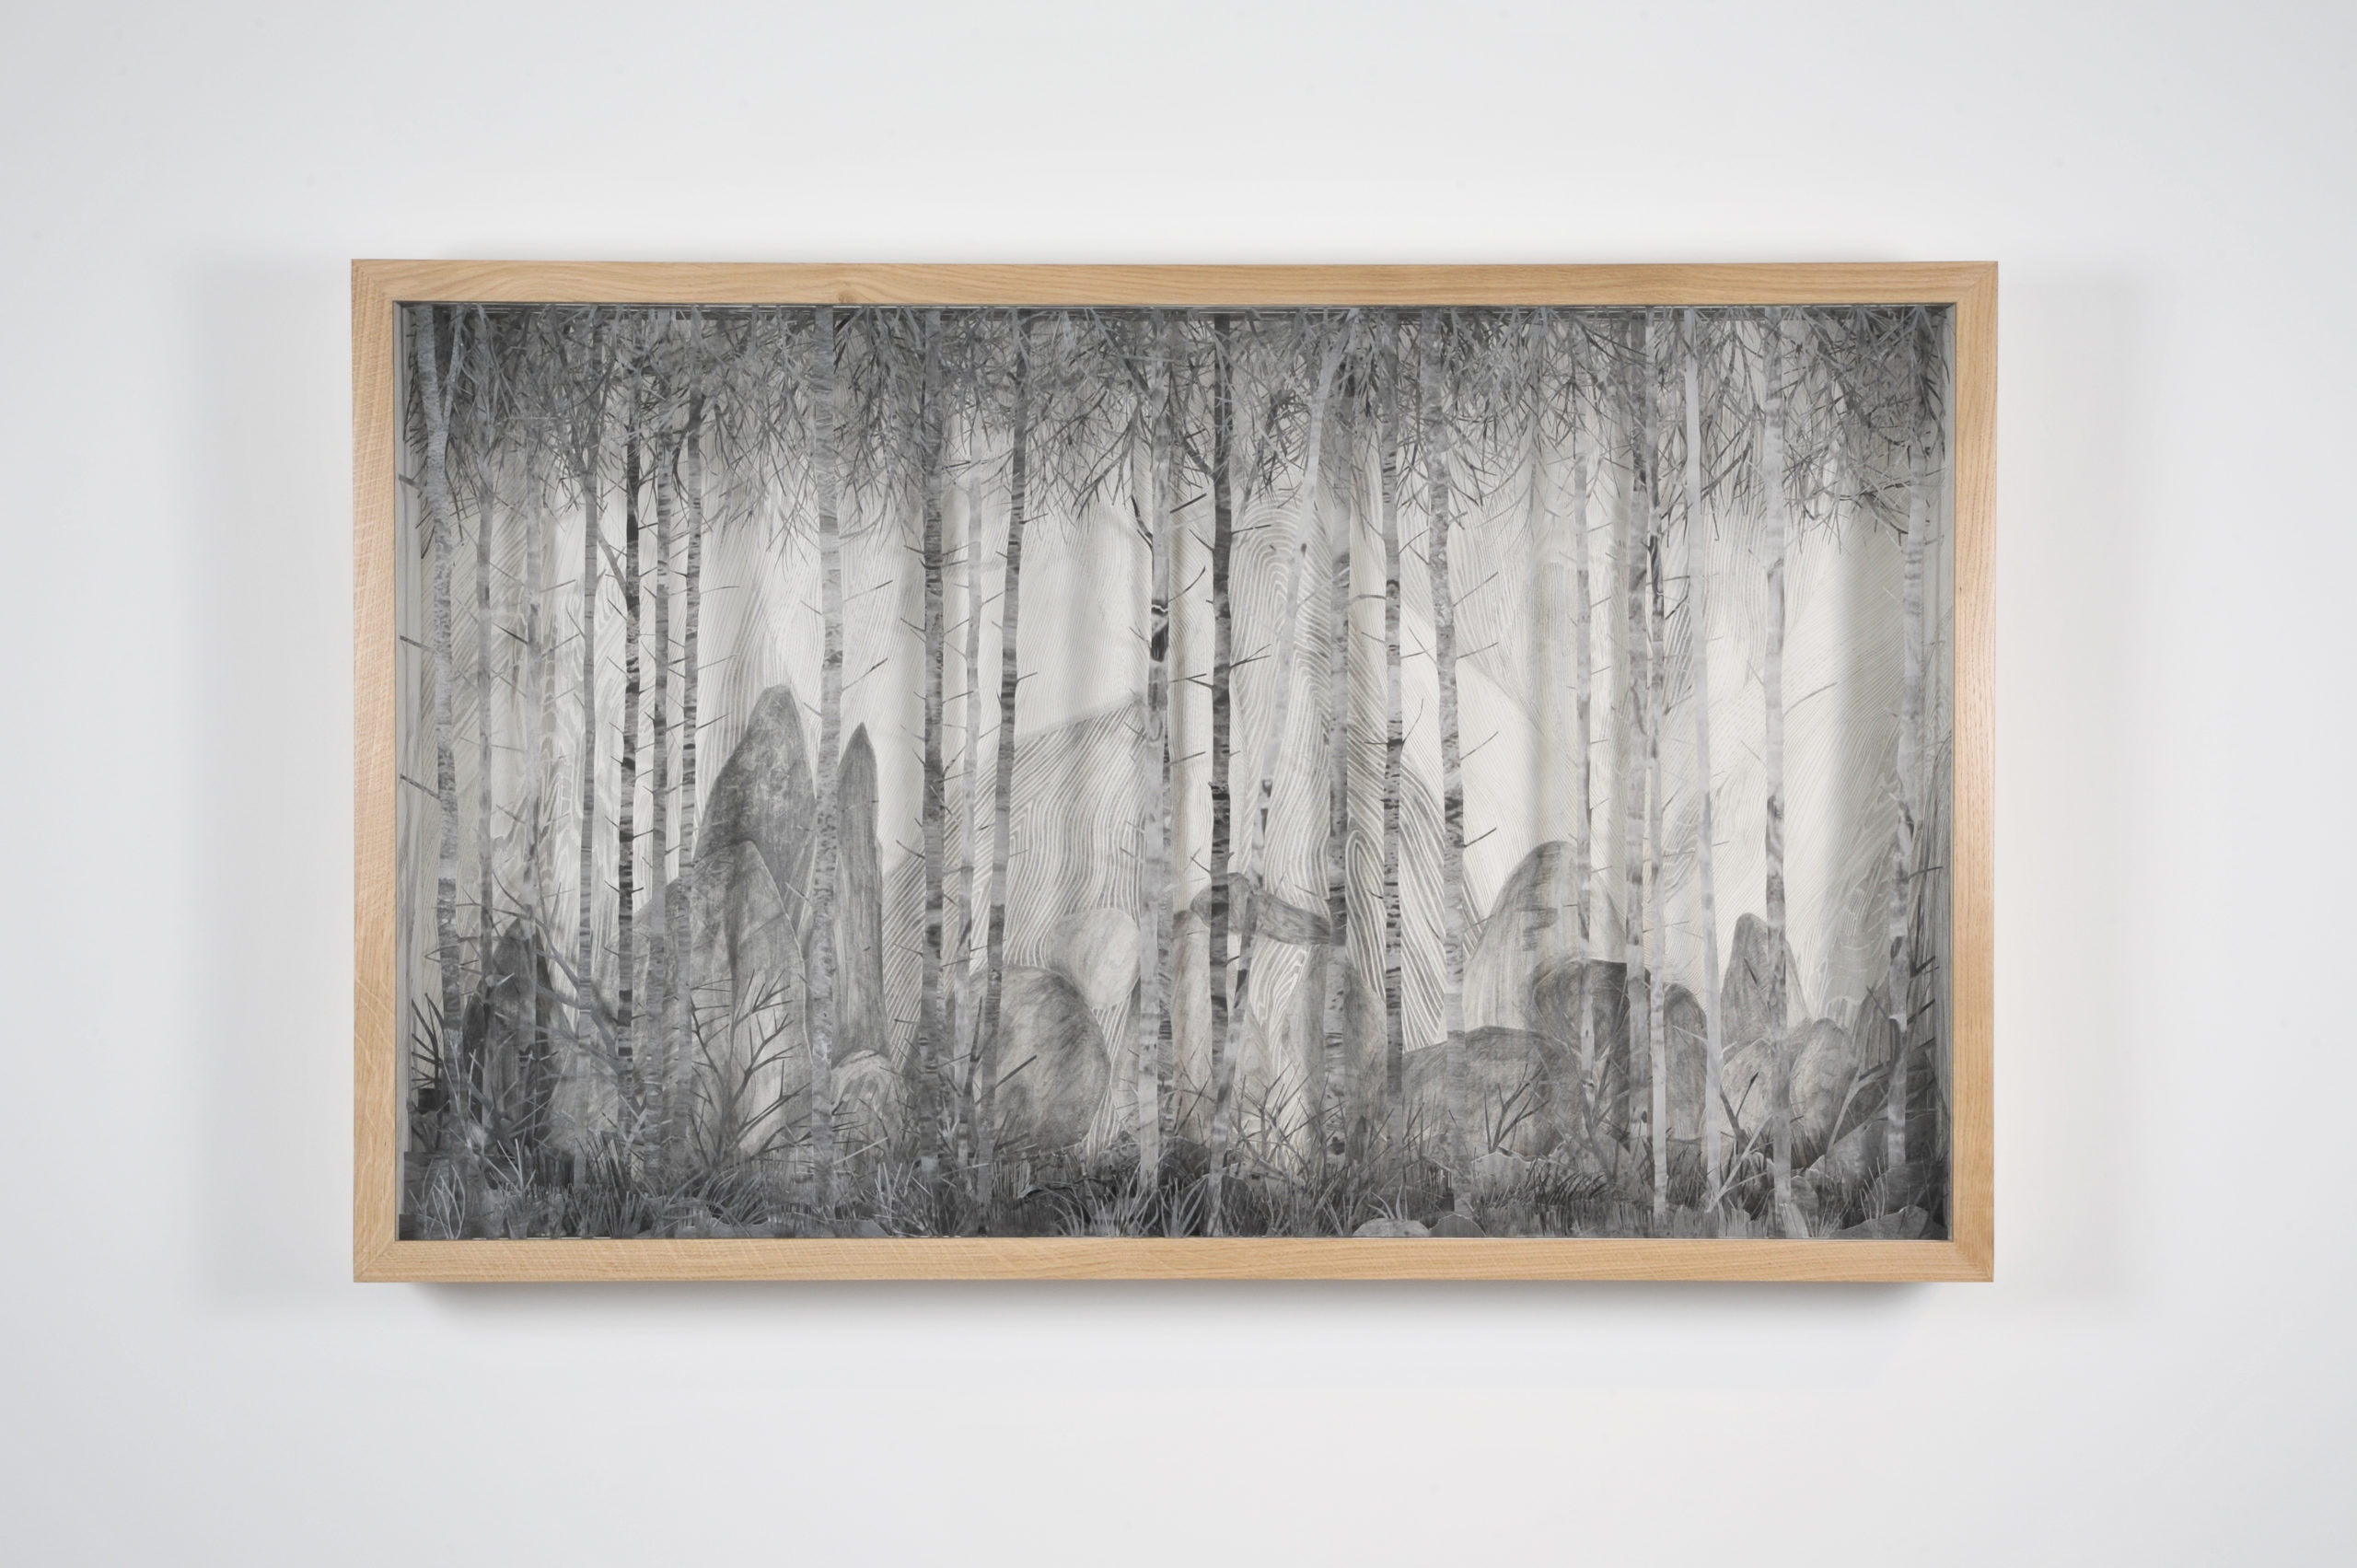 Eva Jospin Dessin 2, 2015 mine de plomb sur papier, 82 x 132 x 12,5 cm © Eva Jospin